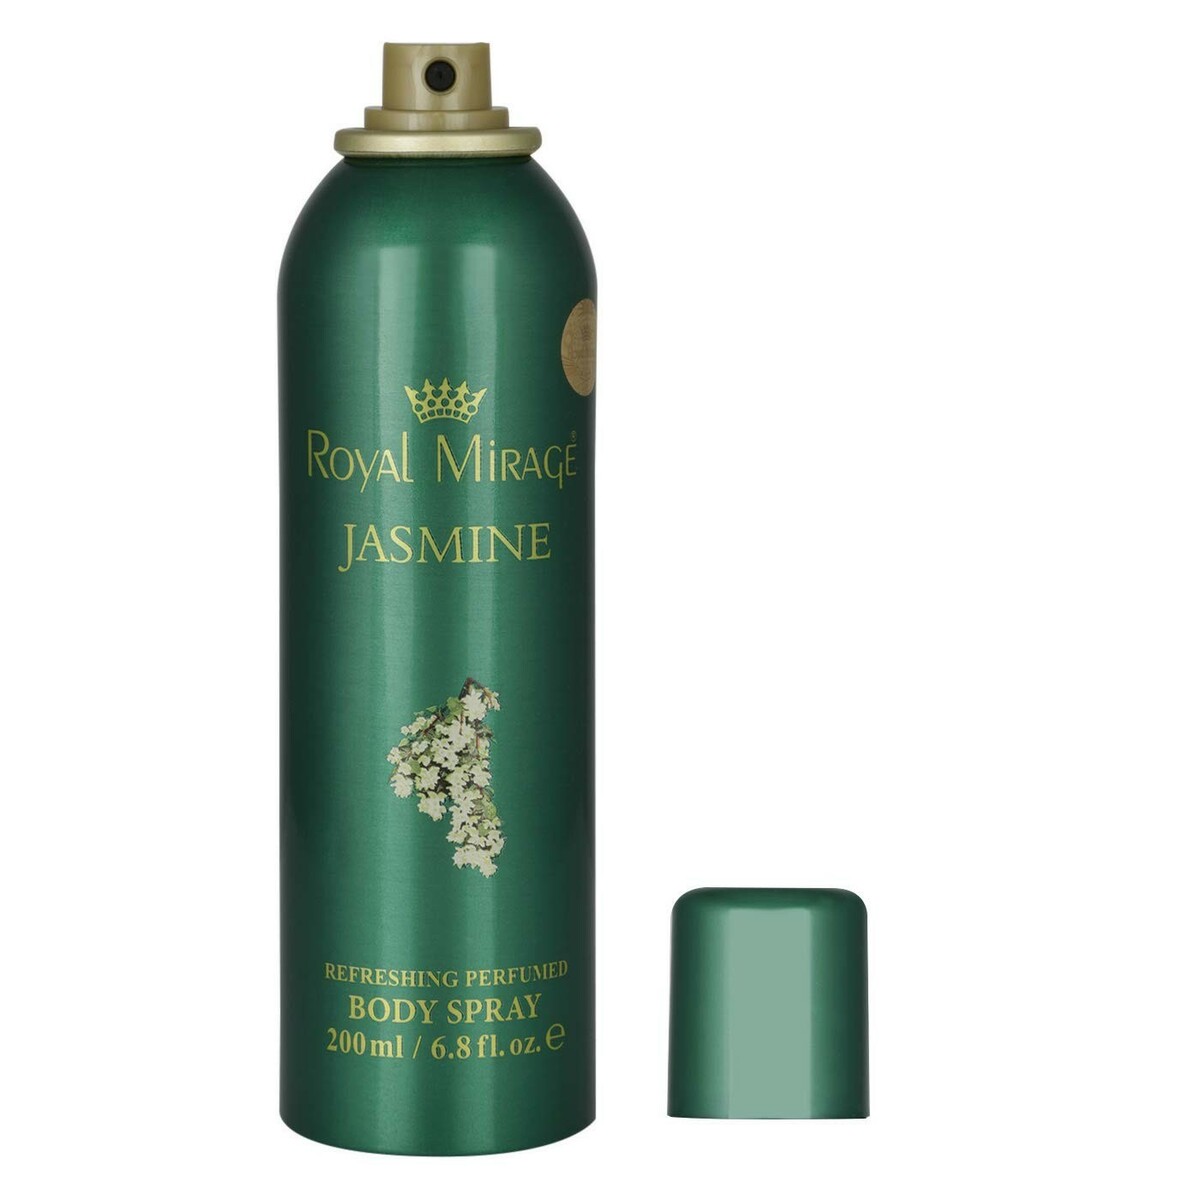 Royal Mirage Deodorant Jasmine 200ml